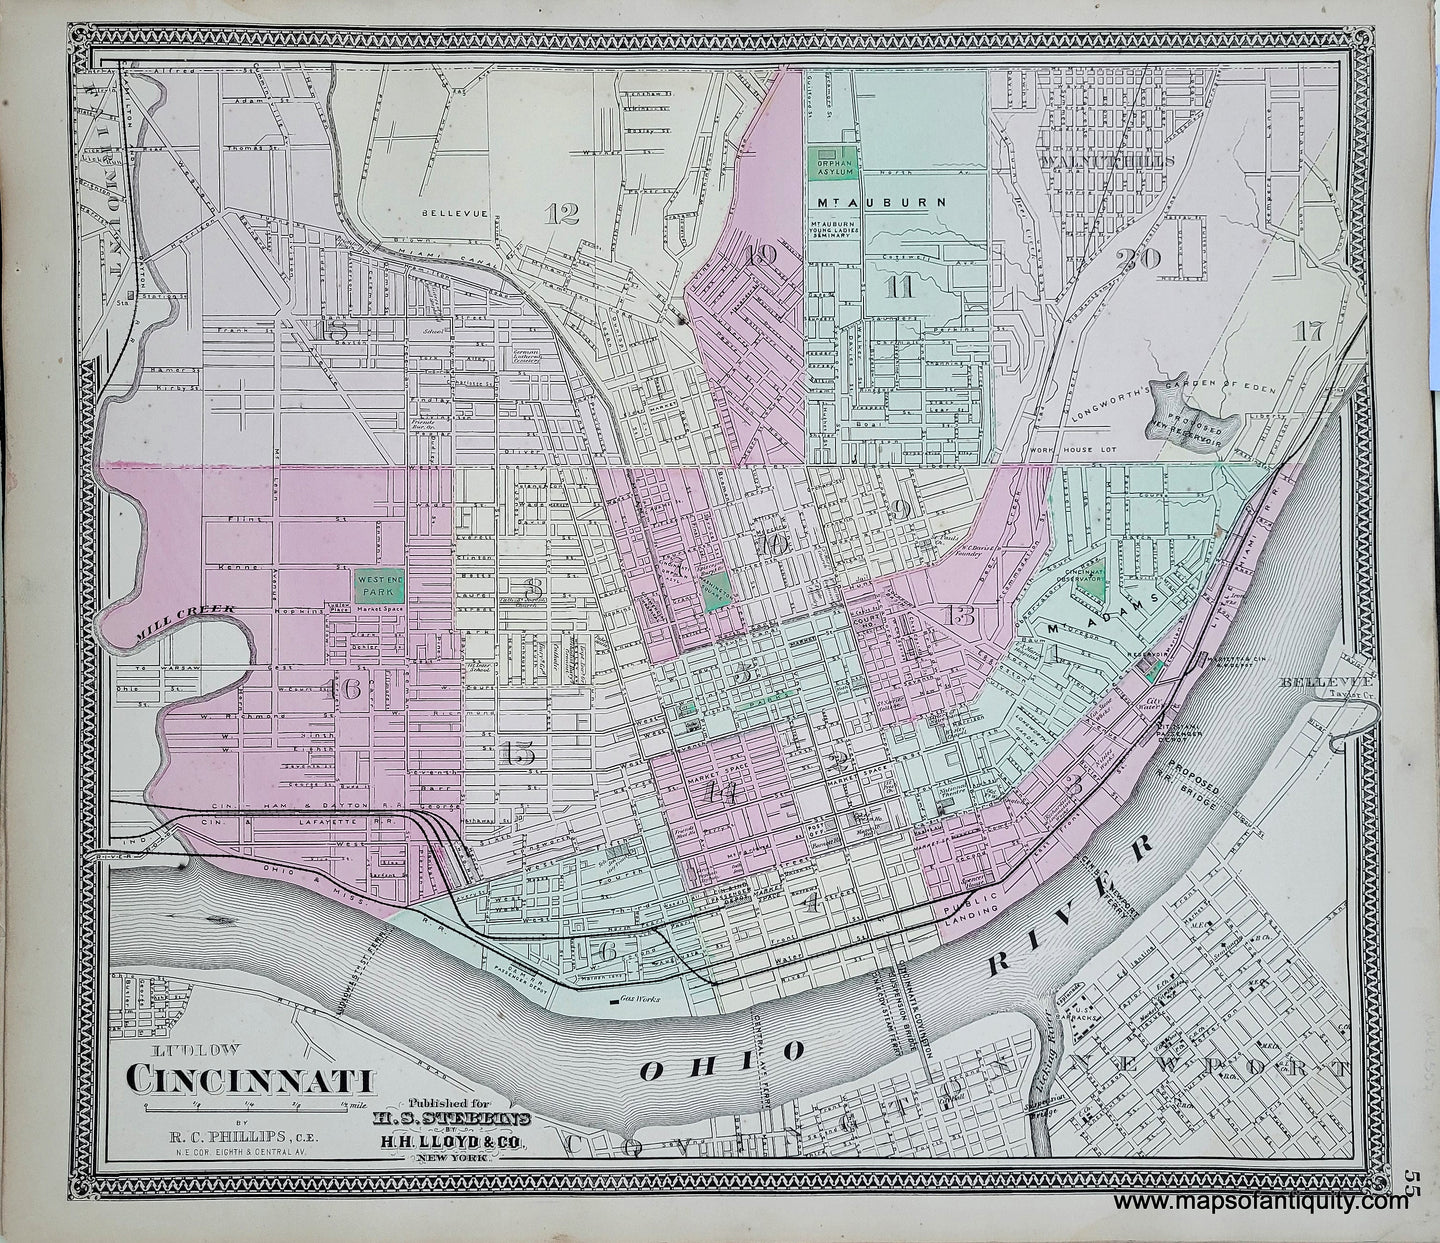 Genuine-Antique-Hand-colored-Map-Cincinnati-1868-Stebbins-Lloyd-Maps-Of-Antiquity